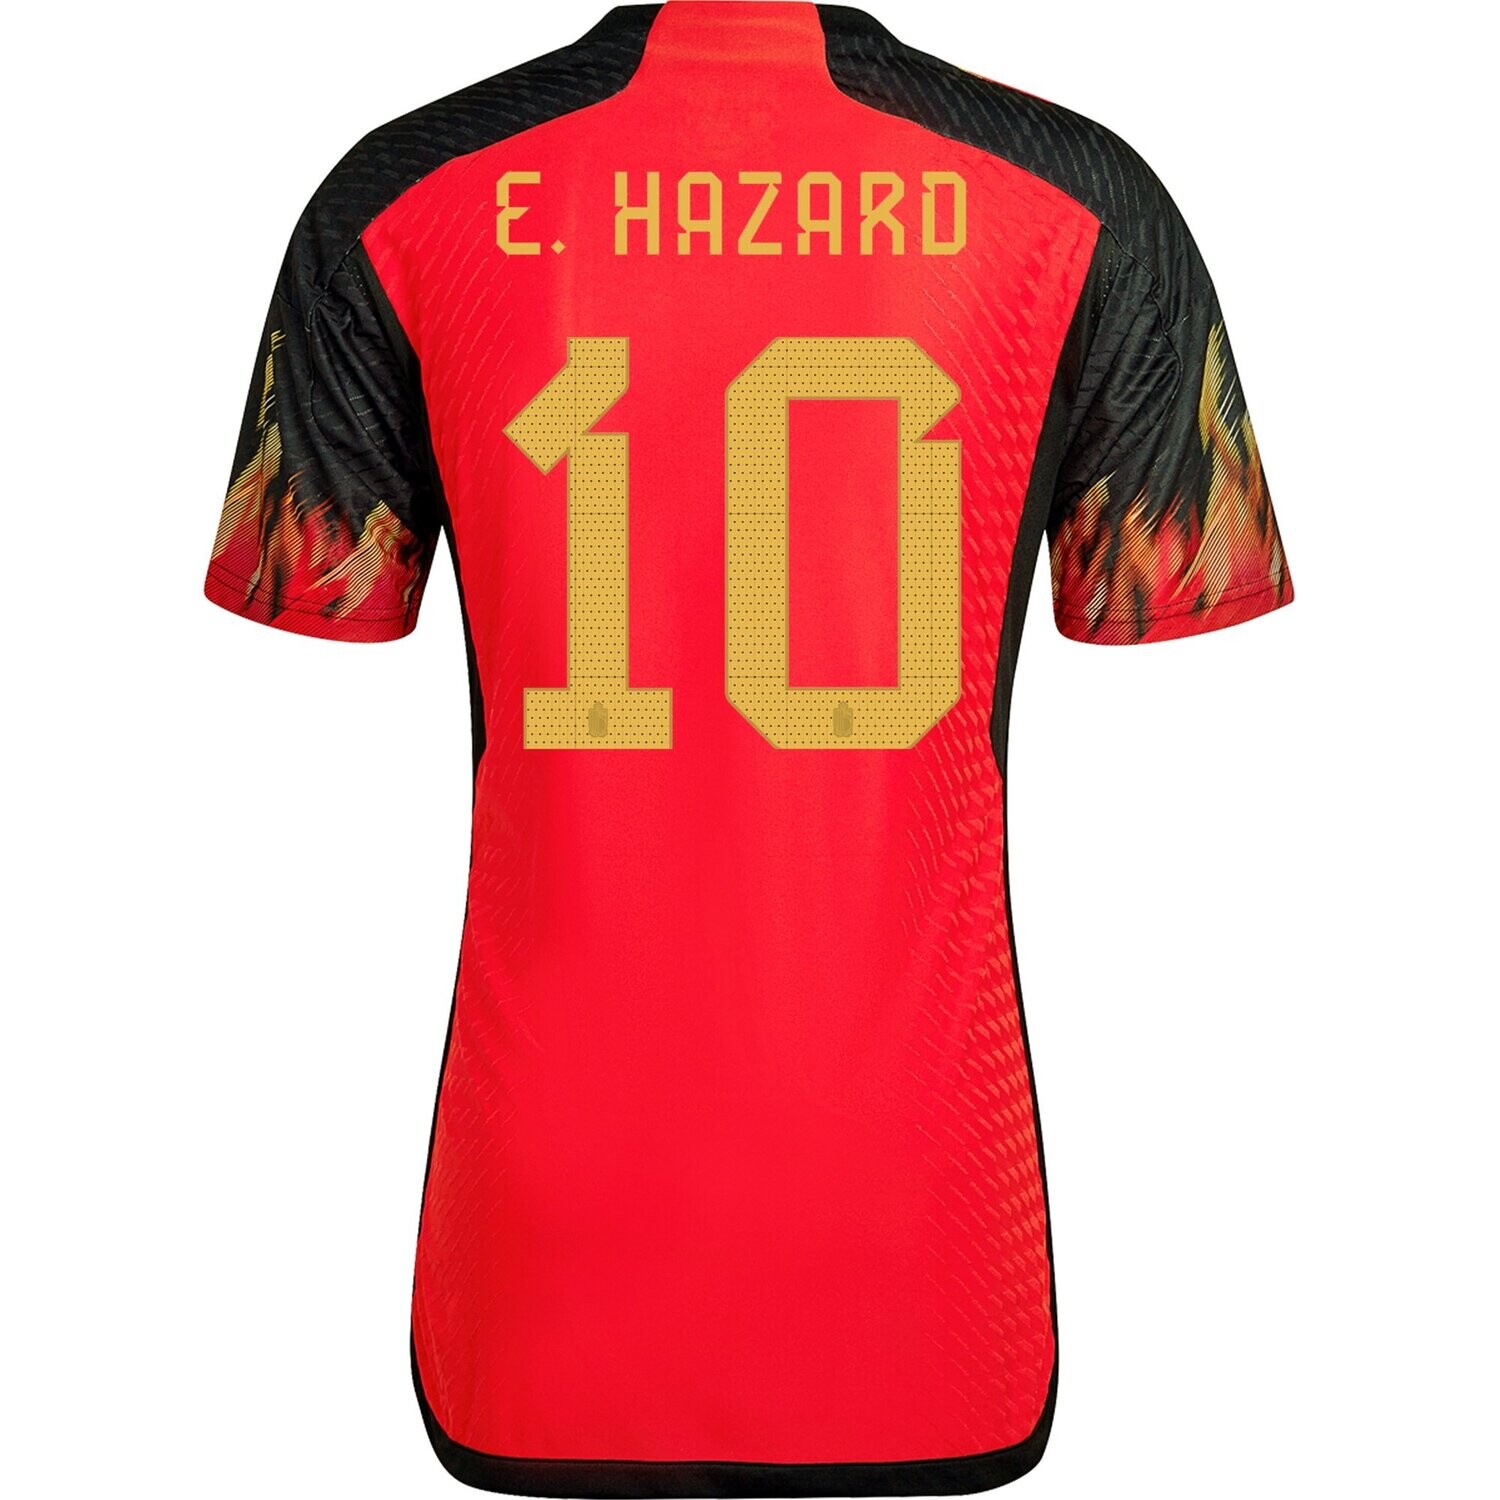 Belgium 2022 World Cup Home Soccer Jersey Player Version (EURO SIZING) E. HAZARD #10